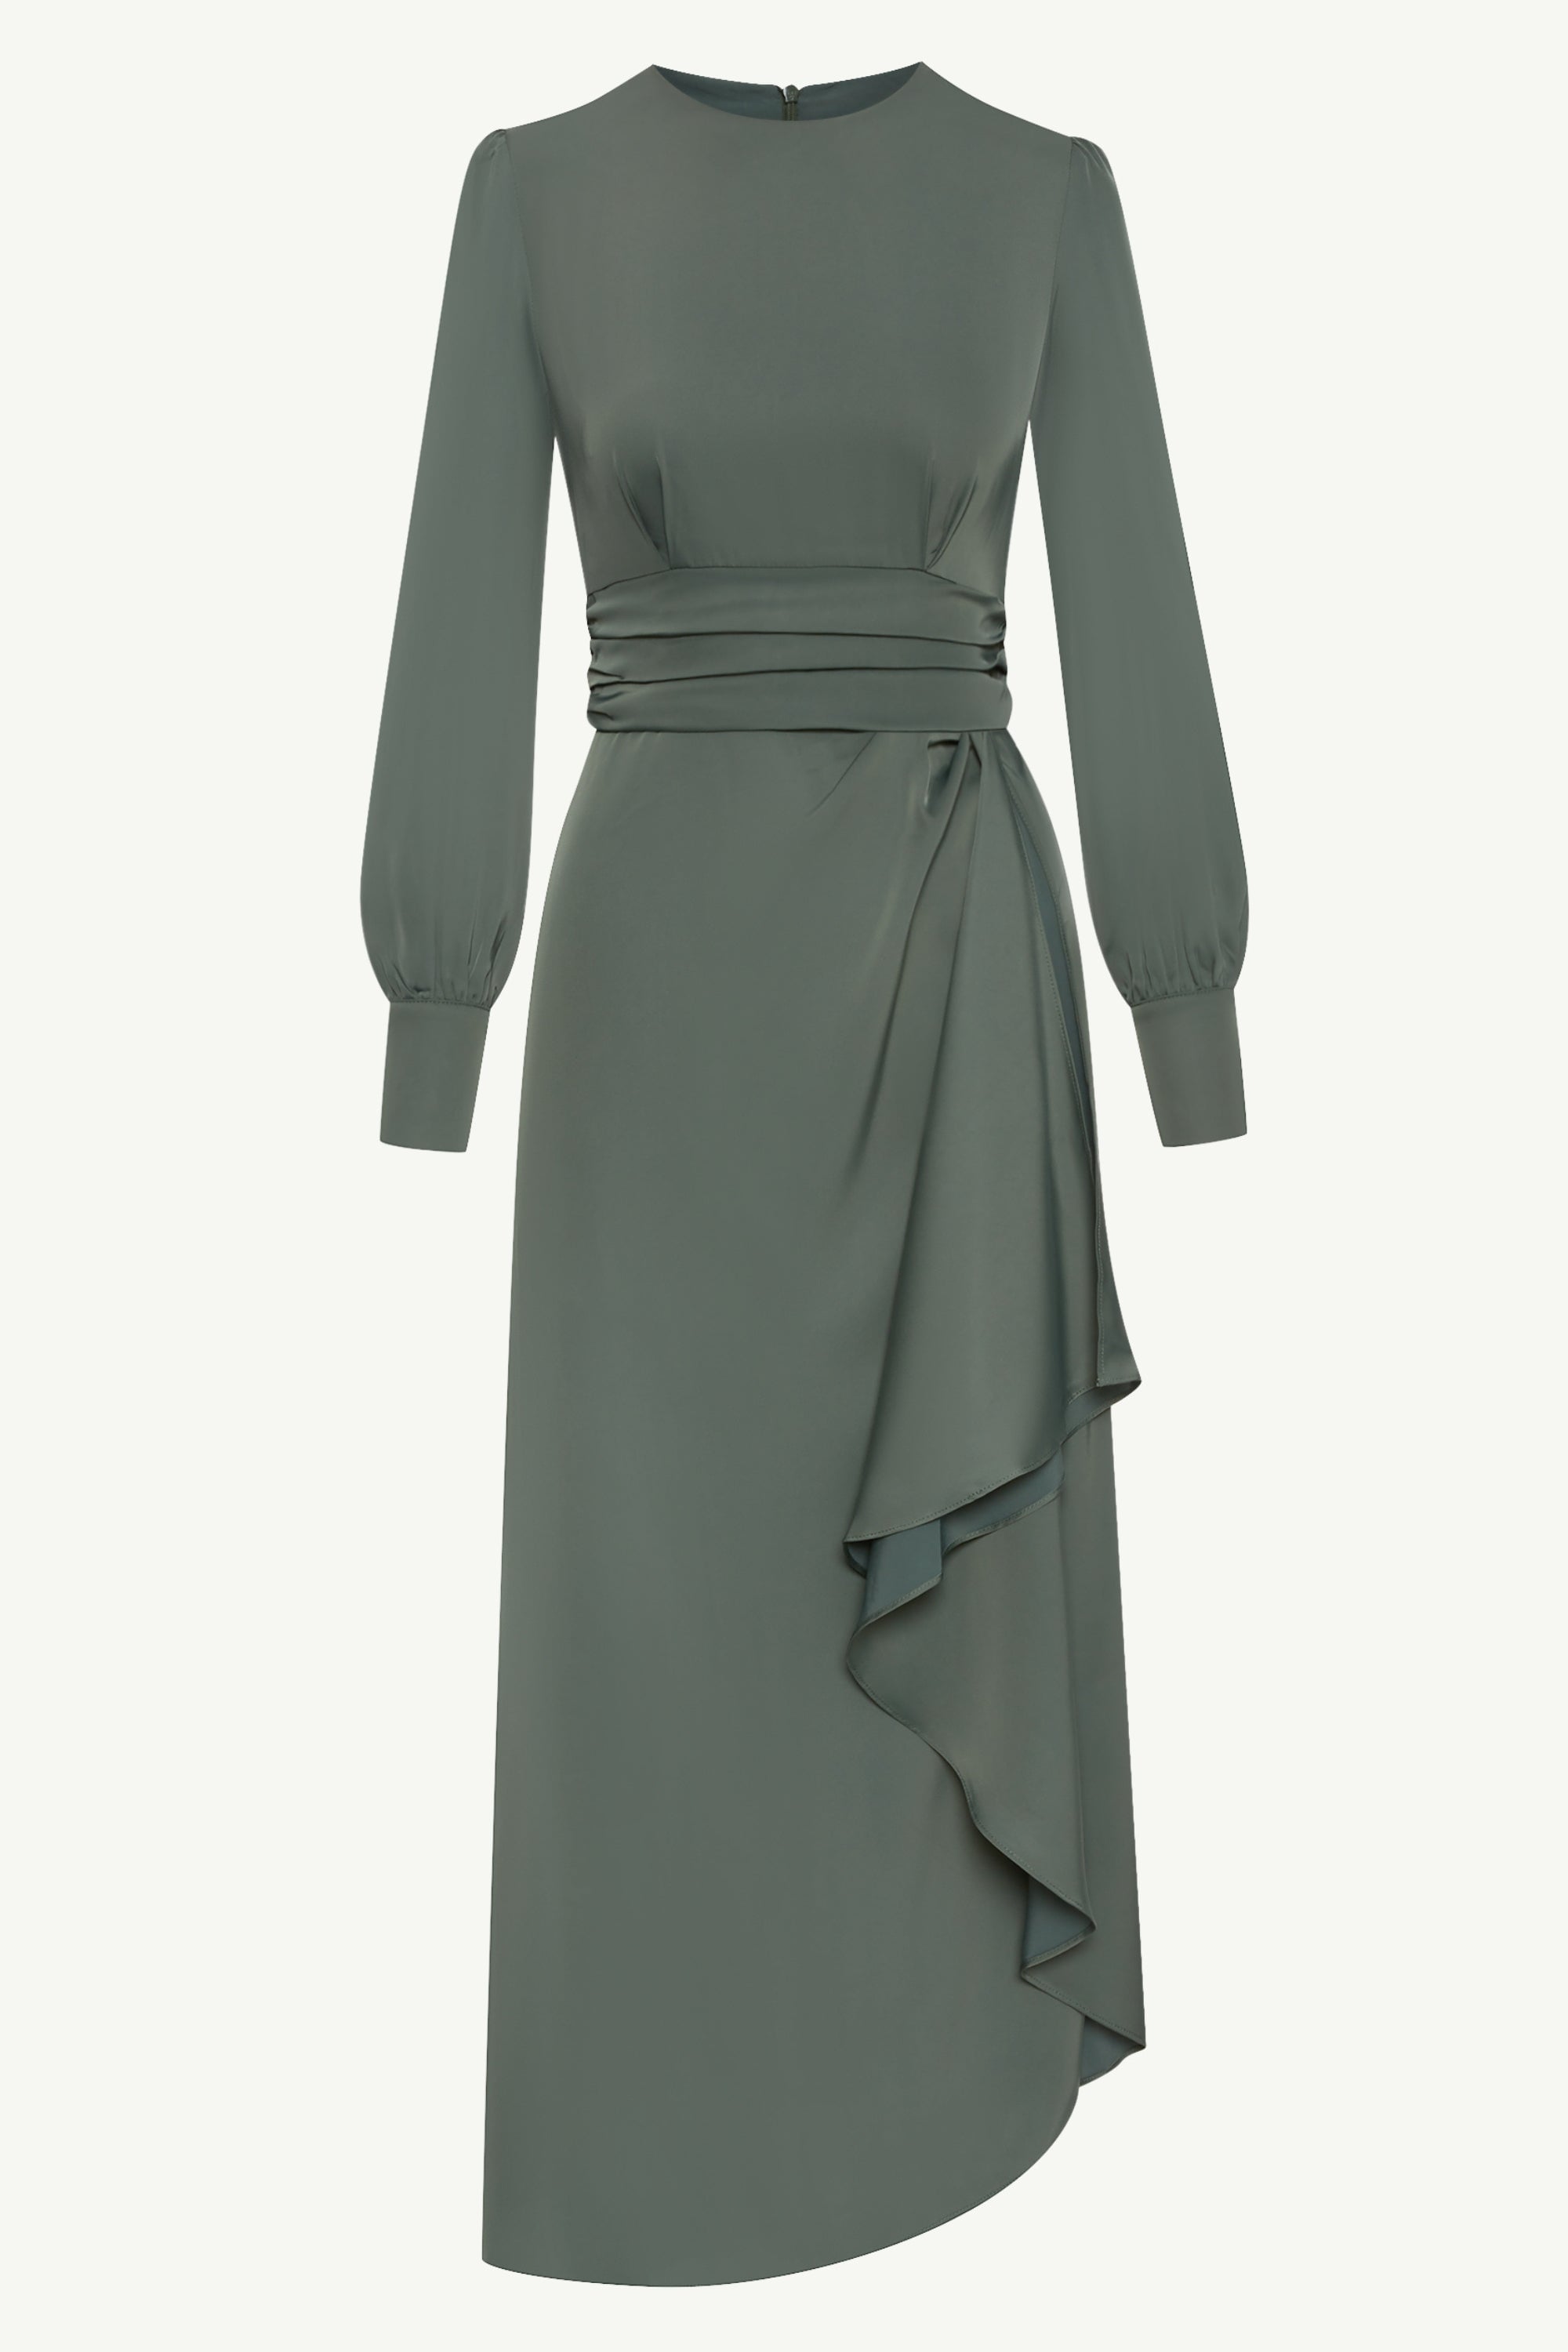 JAPITEX: Women's long-sleeved dress HARMONY